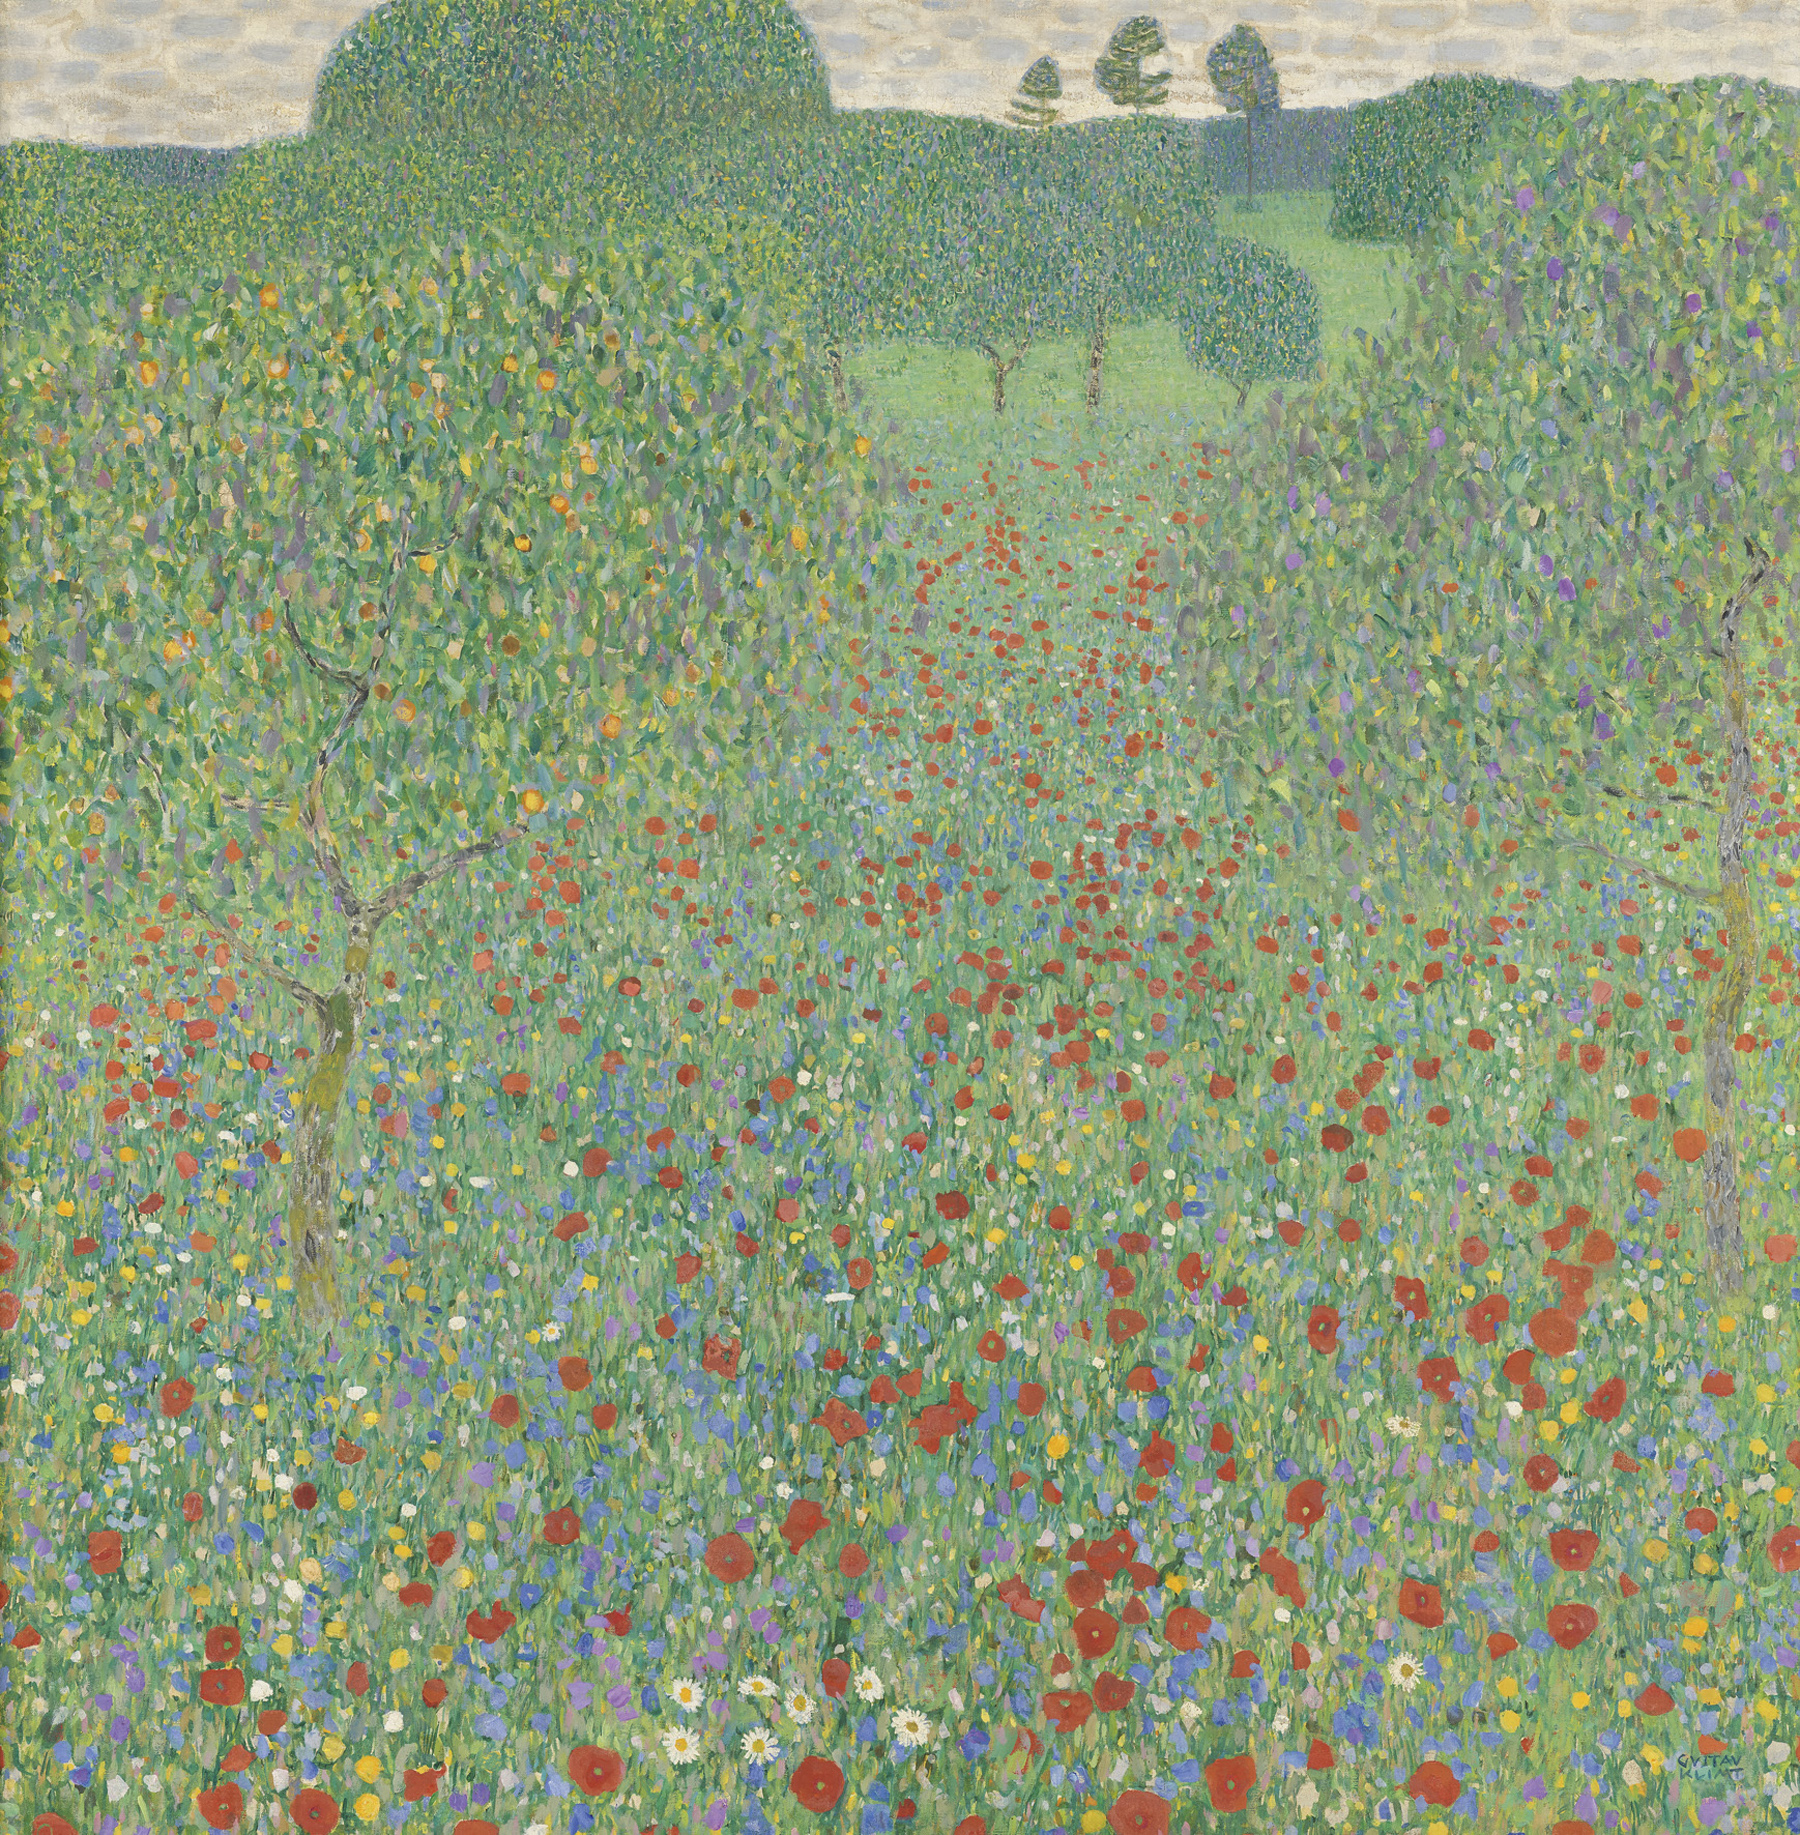 Painting by Gustav Klimt, Field of Poppies (1907)